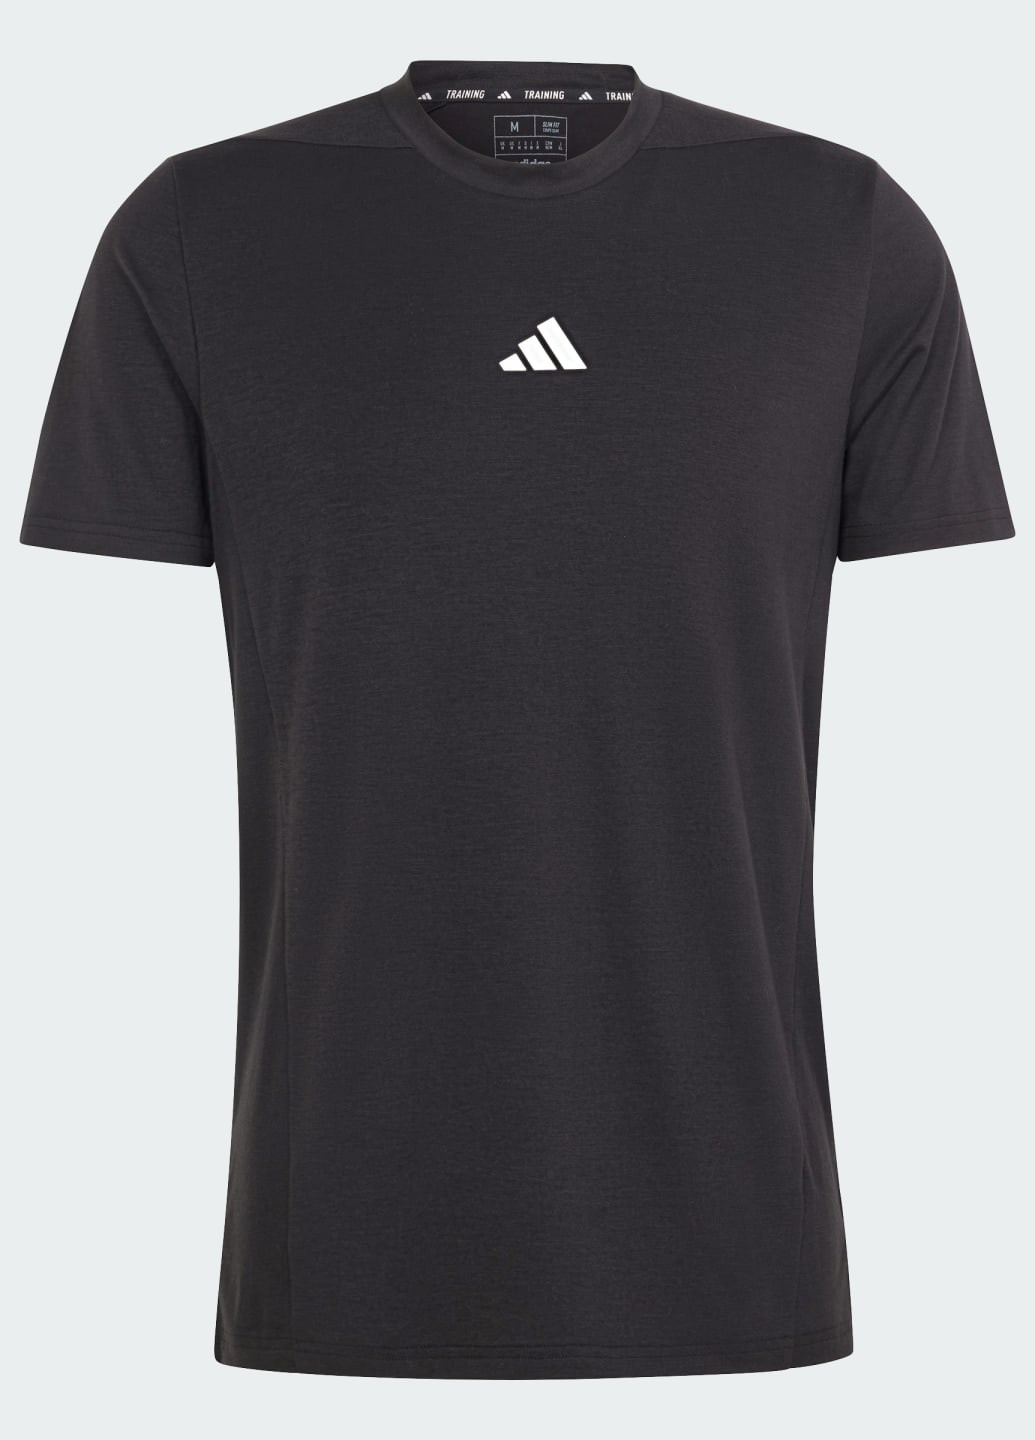 Черная футболка designed for training workout adidas